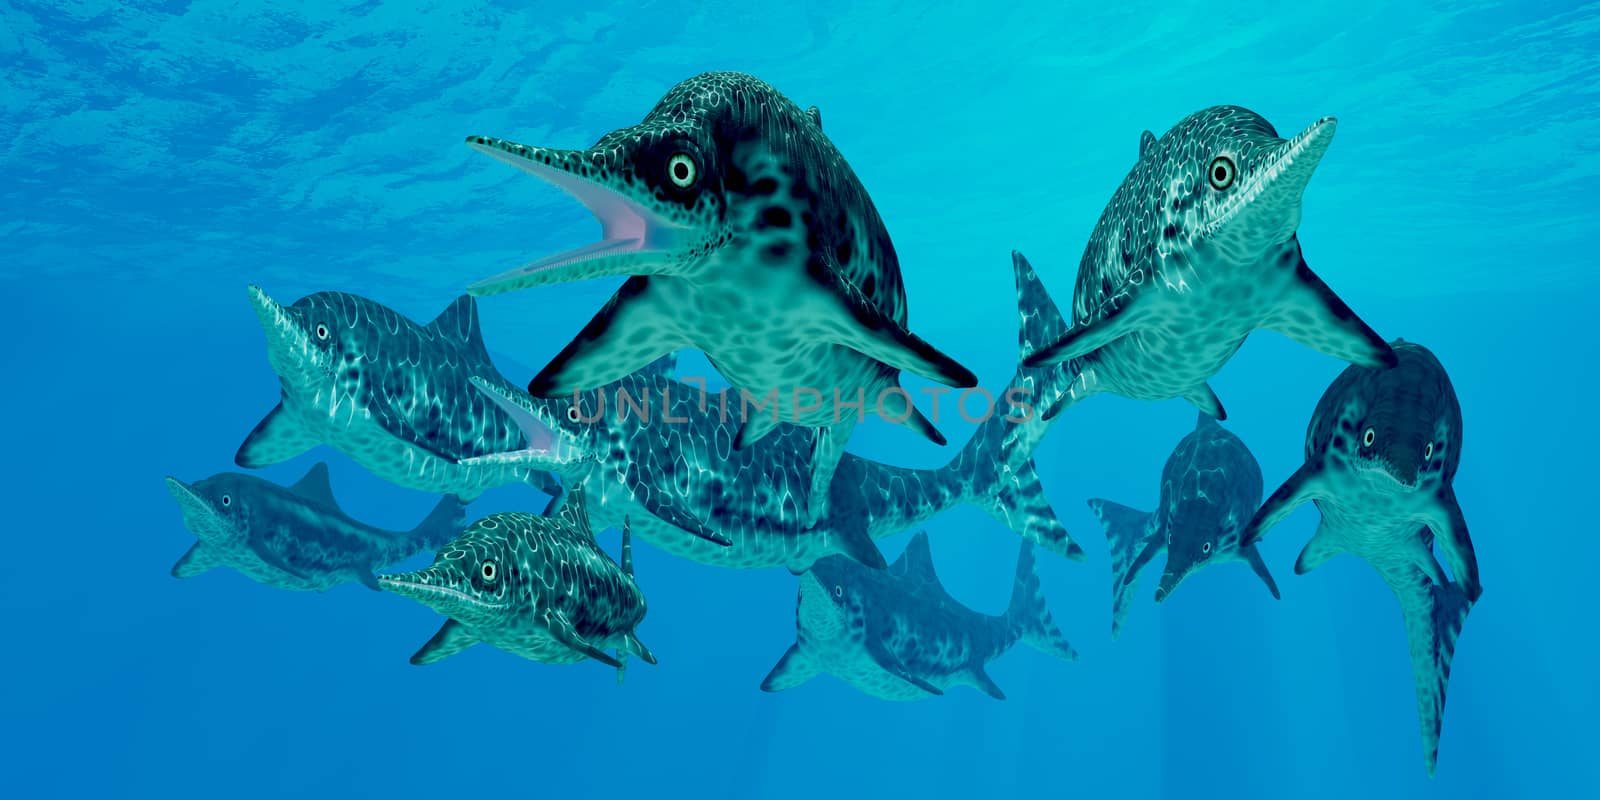 Ichthyosaur Hunting Group by Catmando